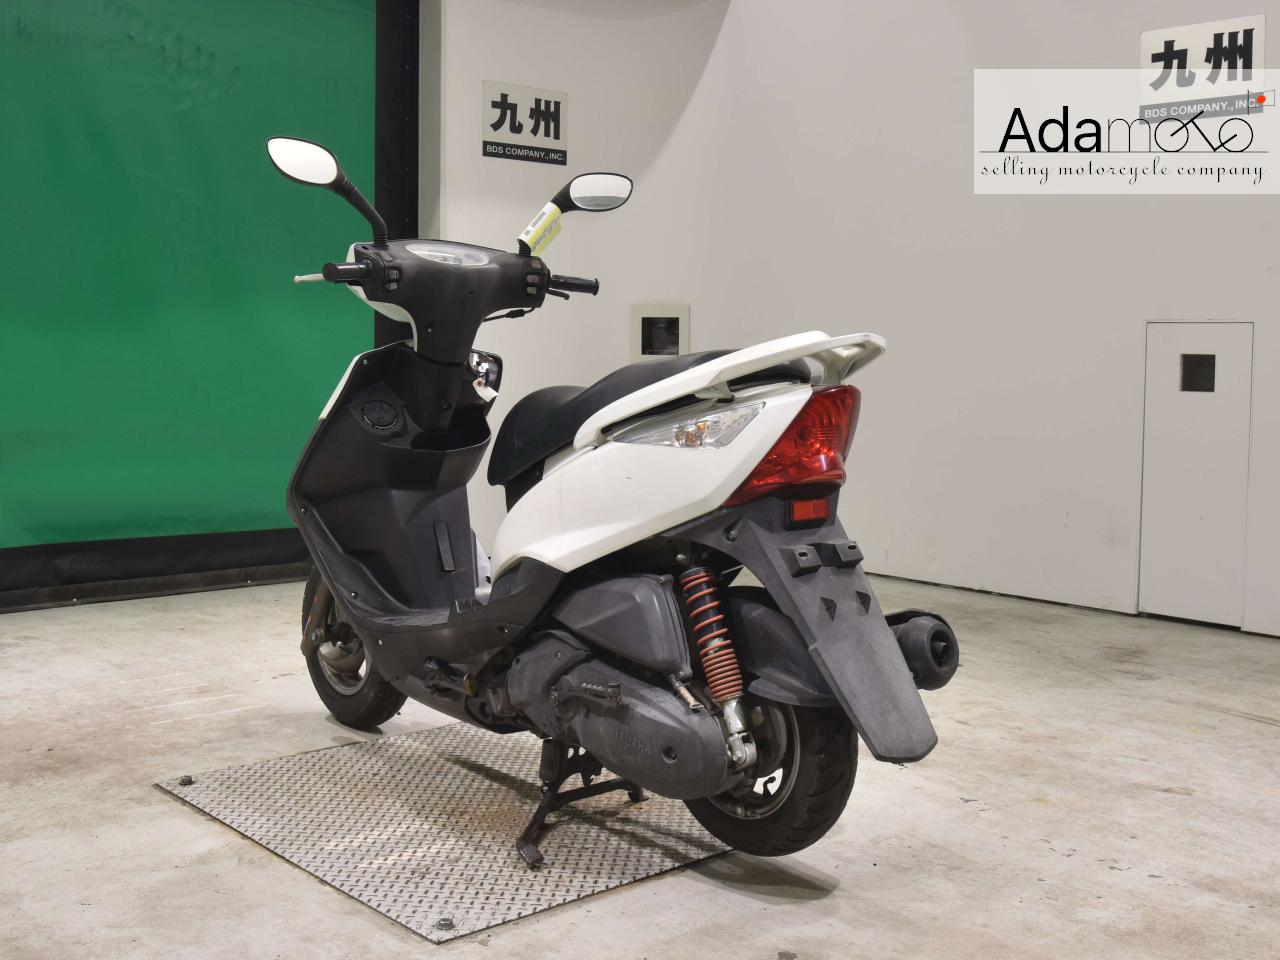 Yamaha GTR125 - Adamoto - Motorcycles from Japan